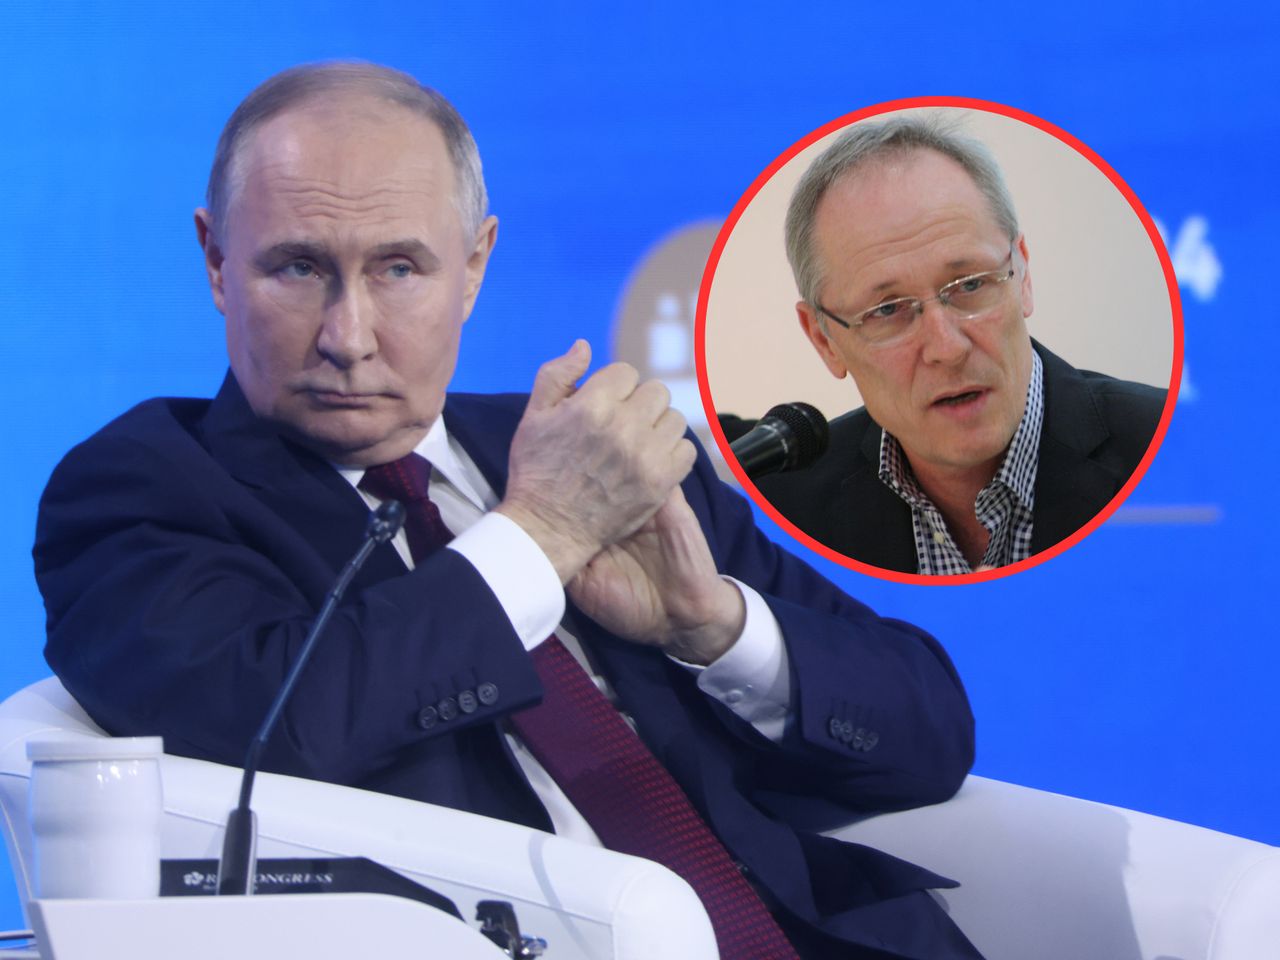 Baberowski warns: Putin plays long game, Ukraine faces grim odds